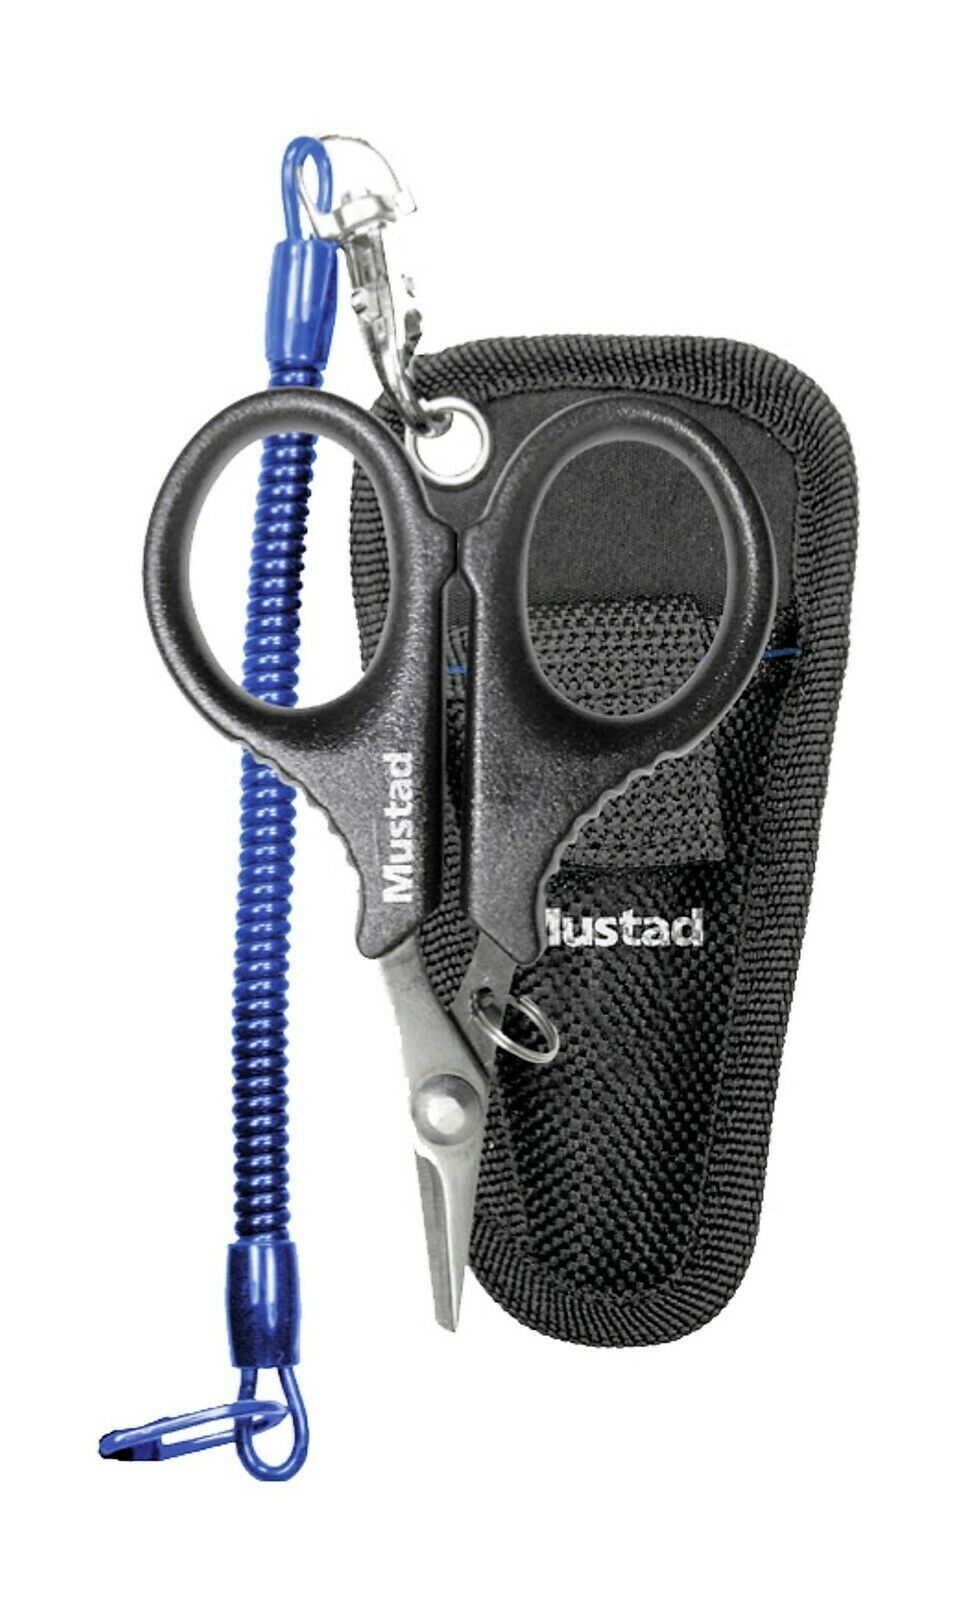 Wilson Stainless Steel Braid Fishing Line Scissors Cutter